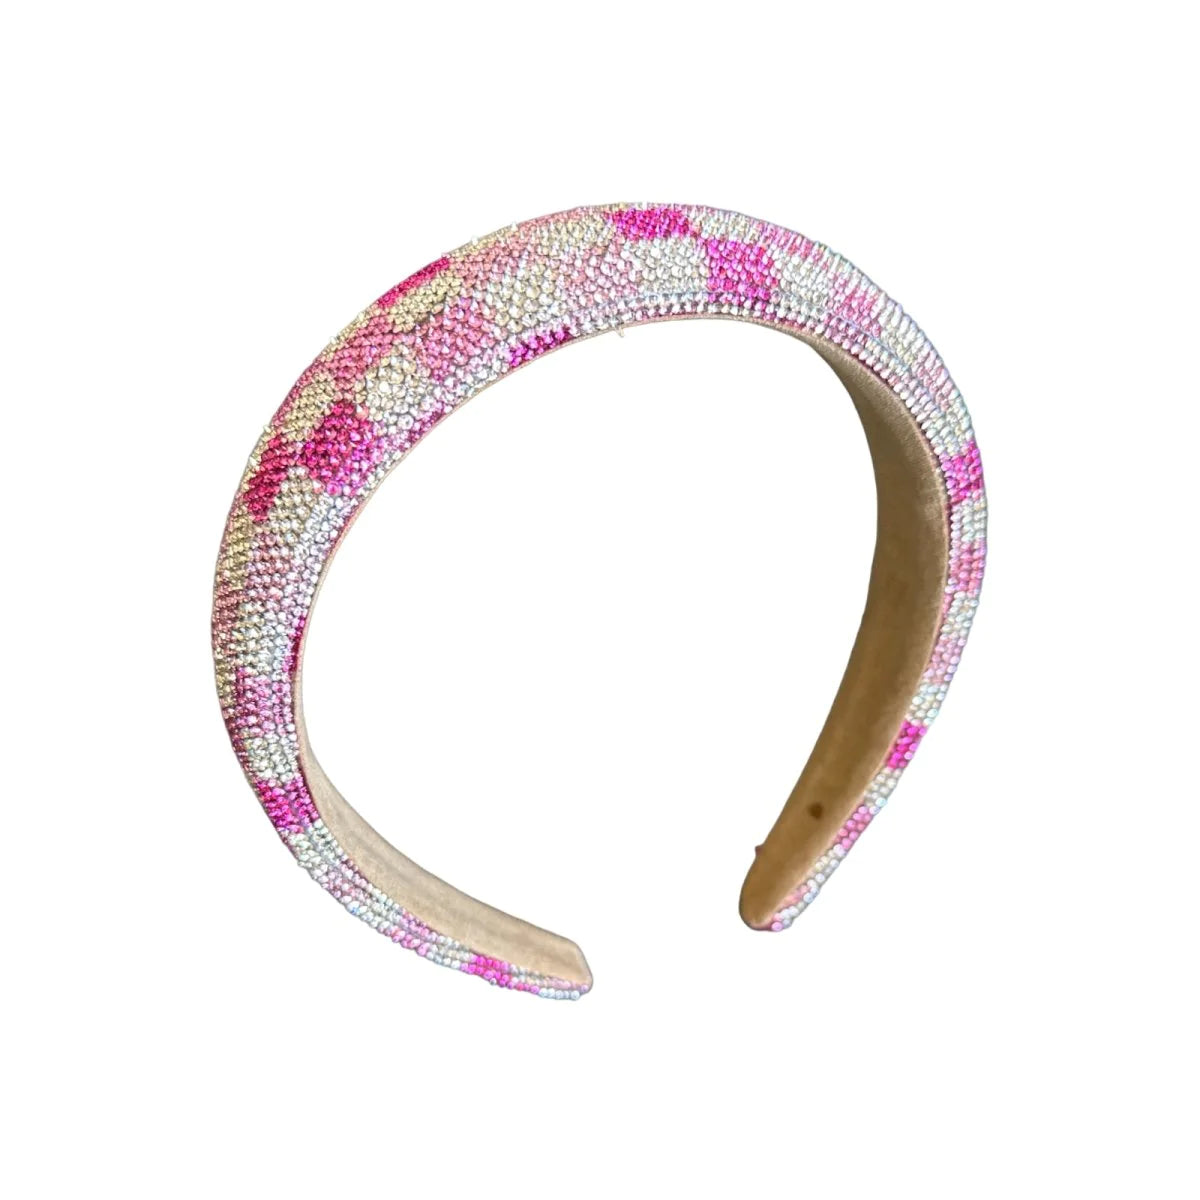 Crystalized Check Fuchsia Pink Headband - Twinkle Twinkle Little One